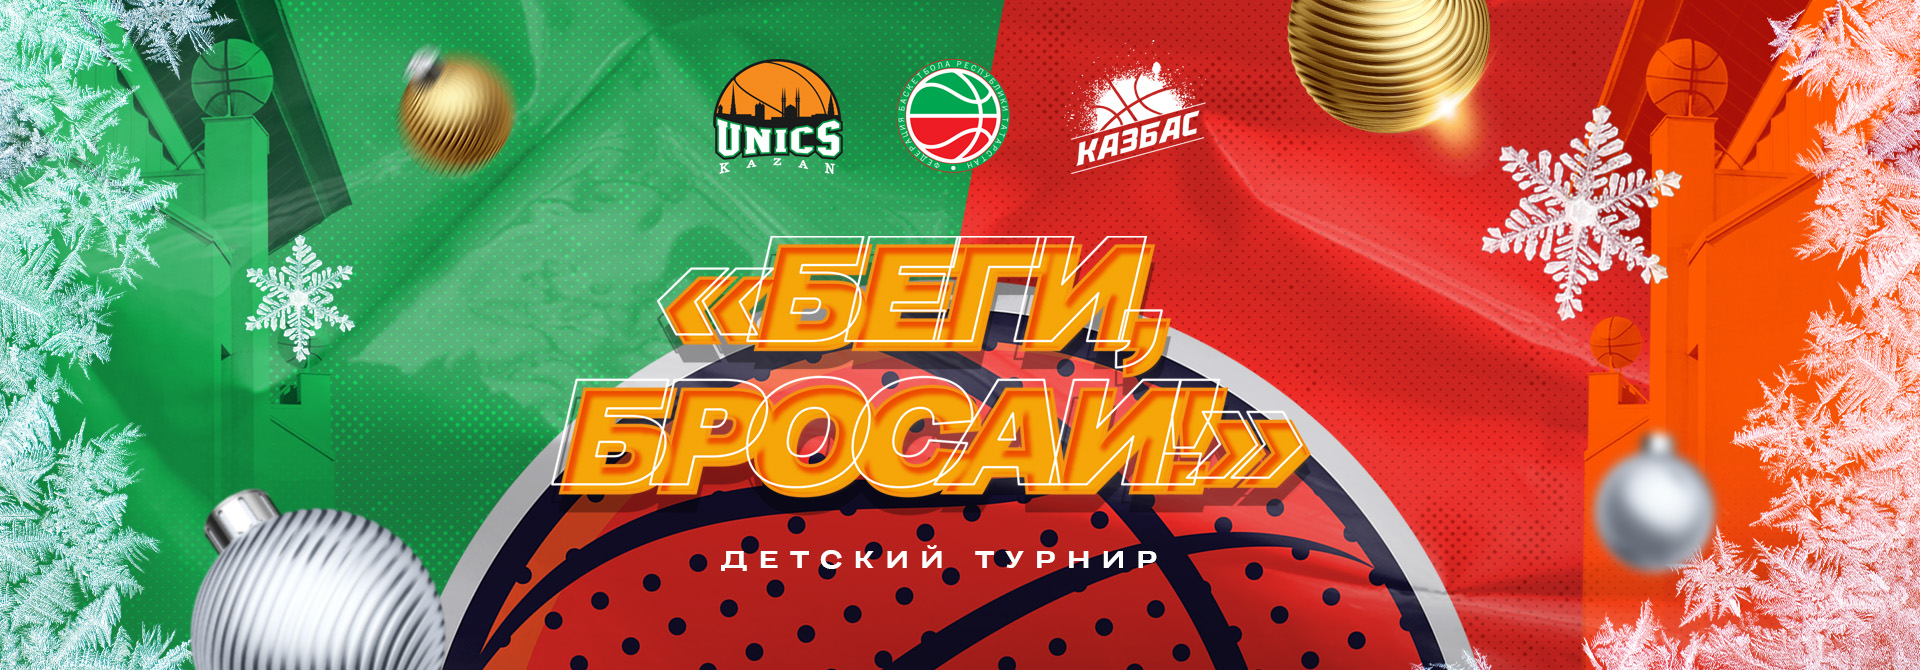 УНИКС, Федерация баскетбола Татарстана и АНО «КазБас» организуют совместный турнир!